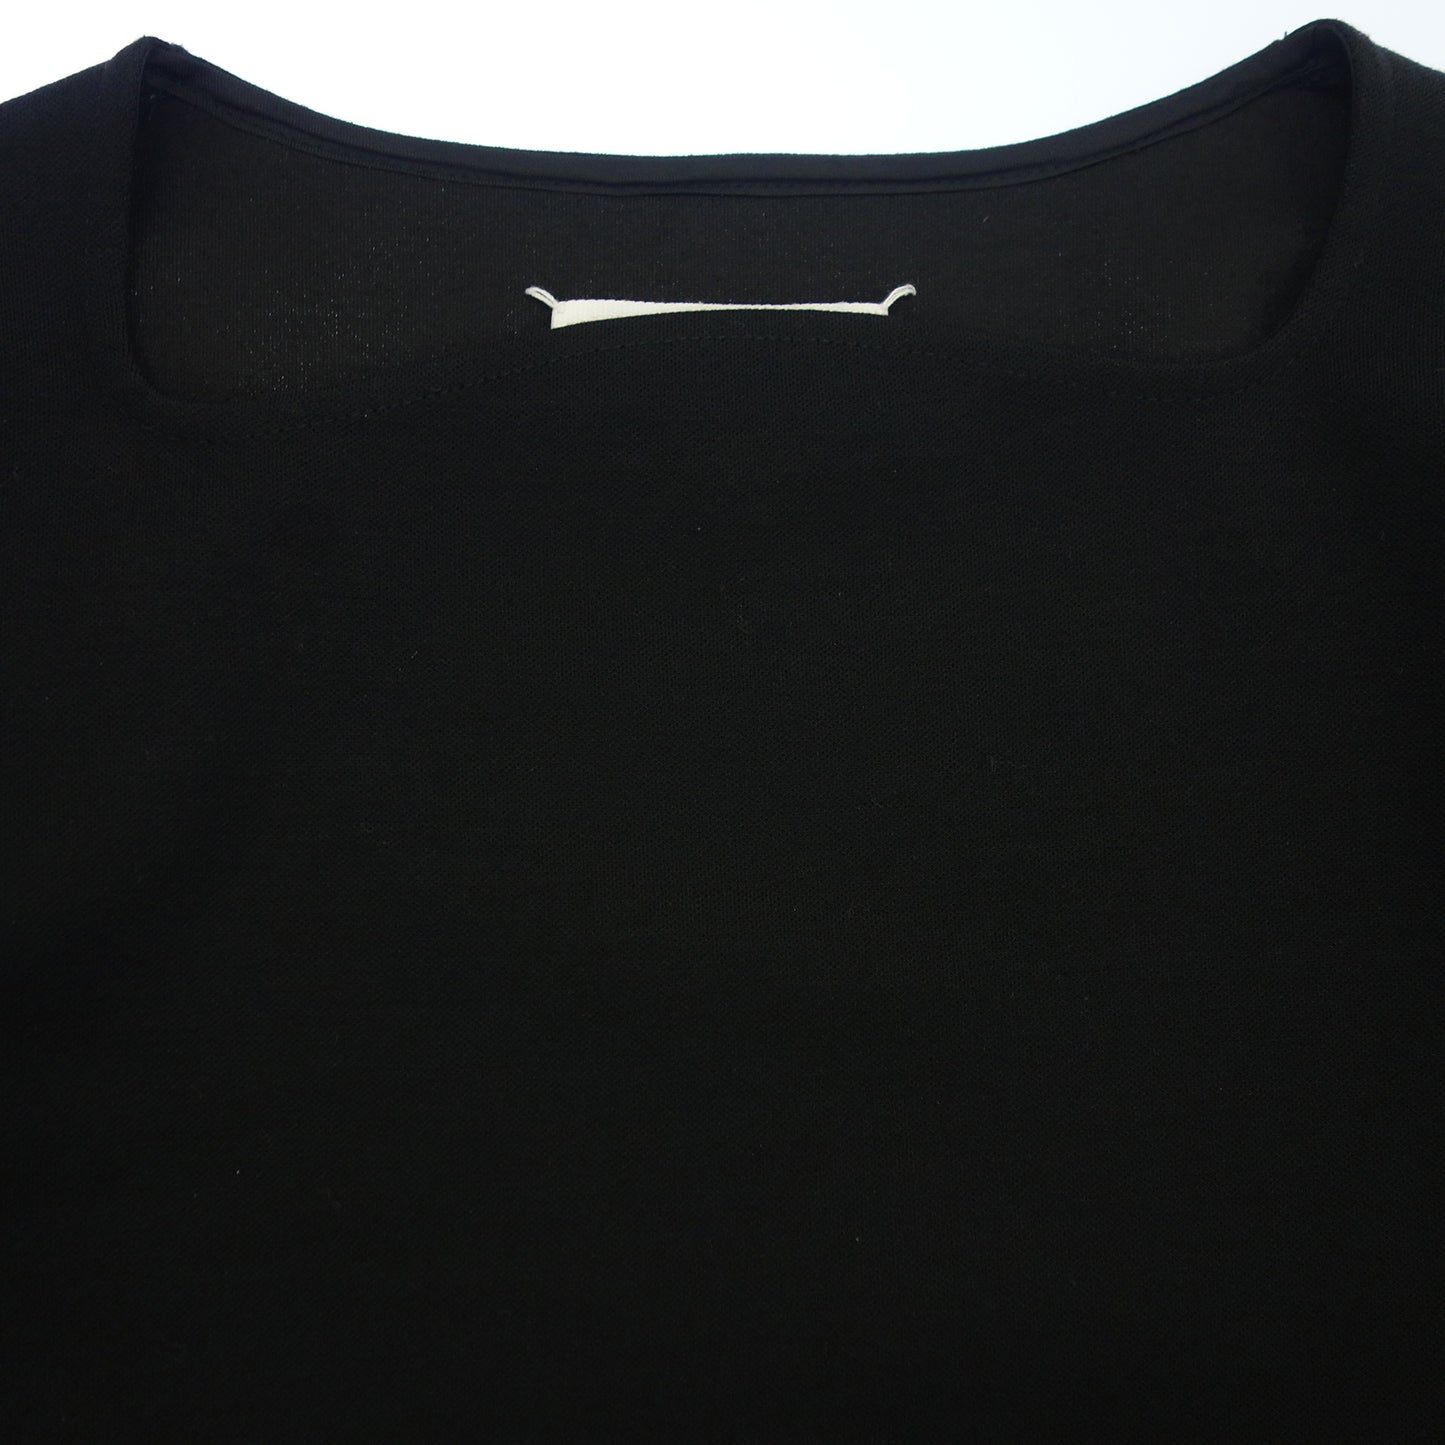 Good condition ◆ Maison Margiela long sleeve tops S51GC0405 Black Size S Ladies Maison Margiela [AFB43] 